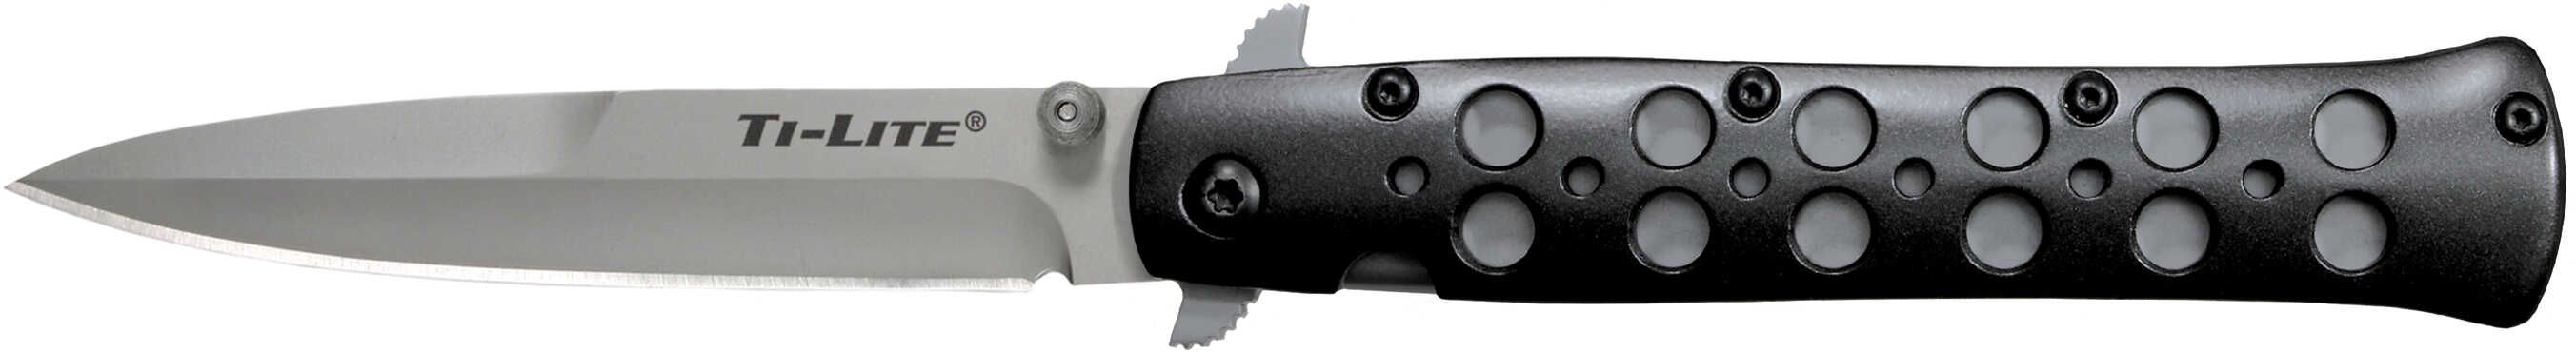 Cold Steel Ti-Lite Folding Knife CPM-S35VN Plain Edge Spear Point Aluminum Handle 4" 26B4